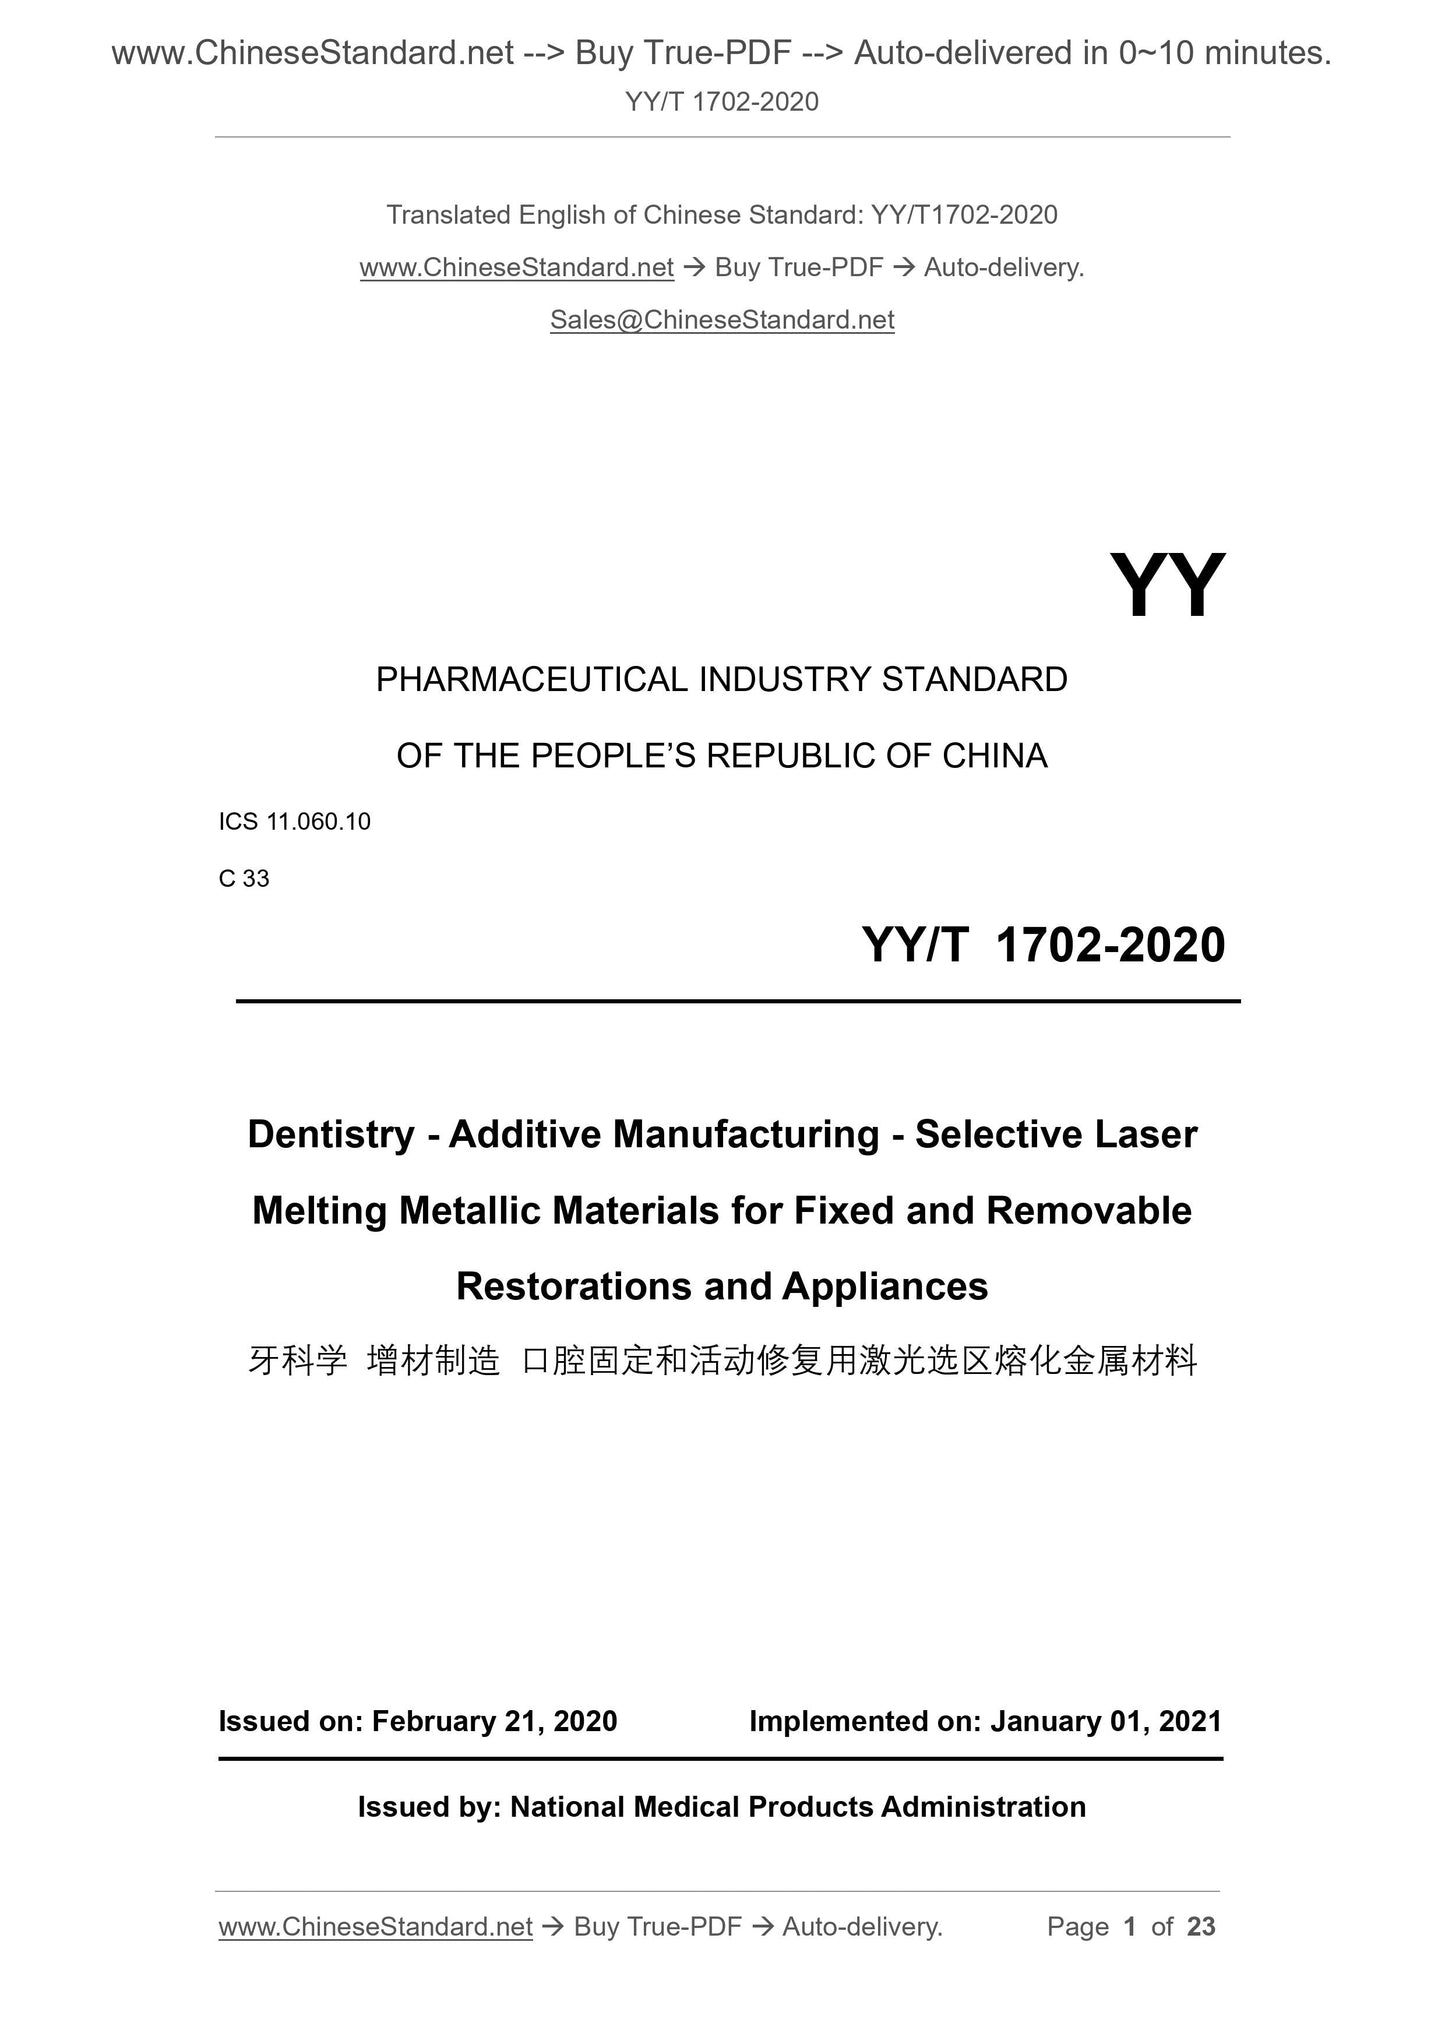 YY/T 1702-2020 Page 1